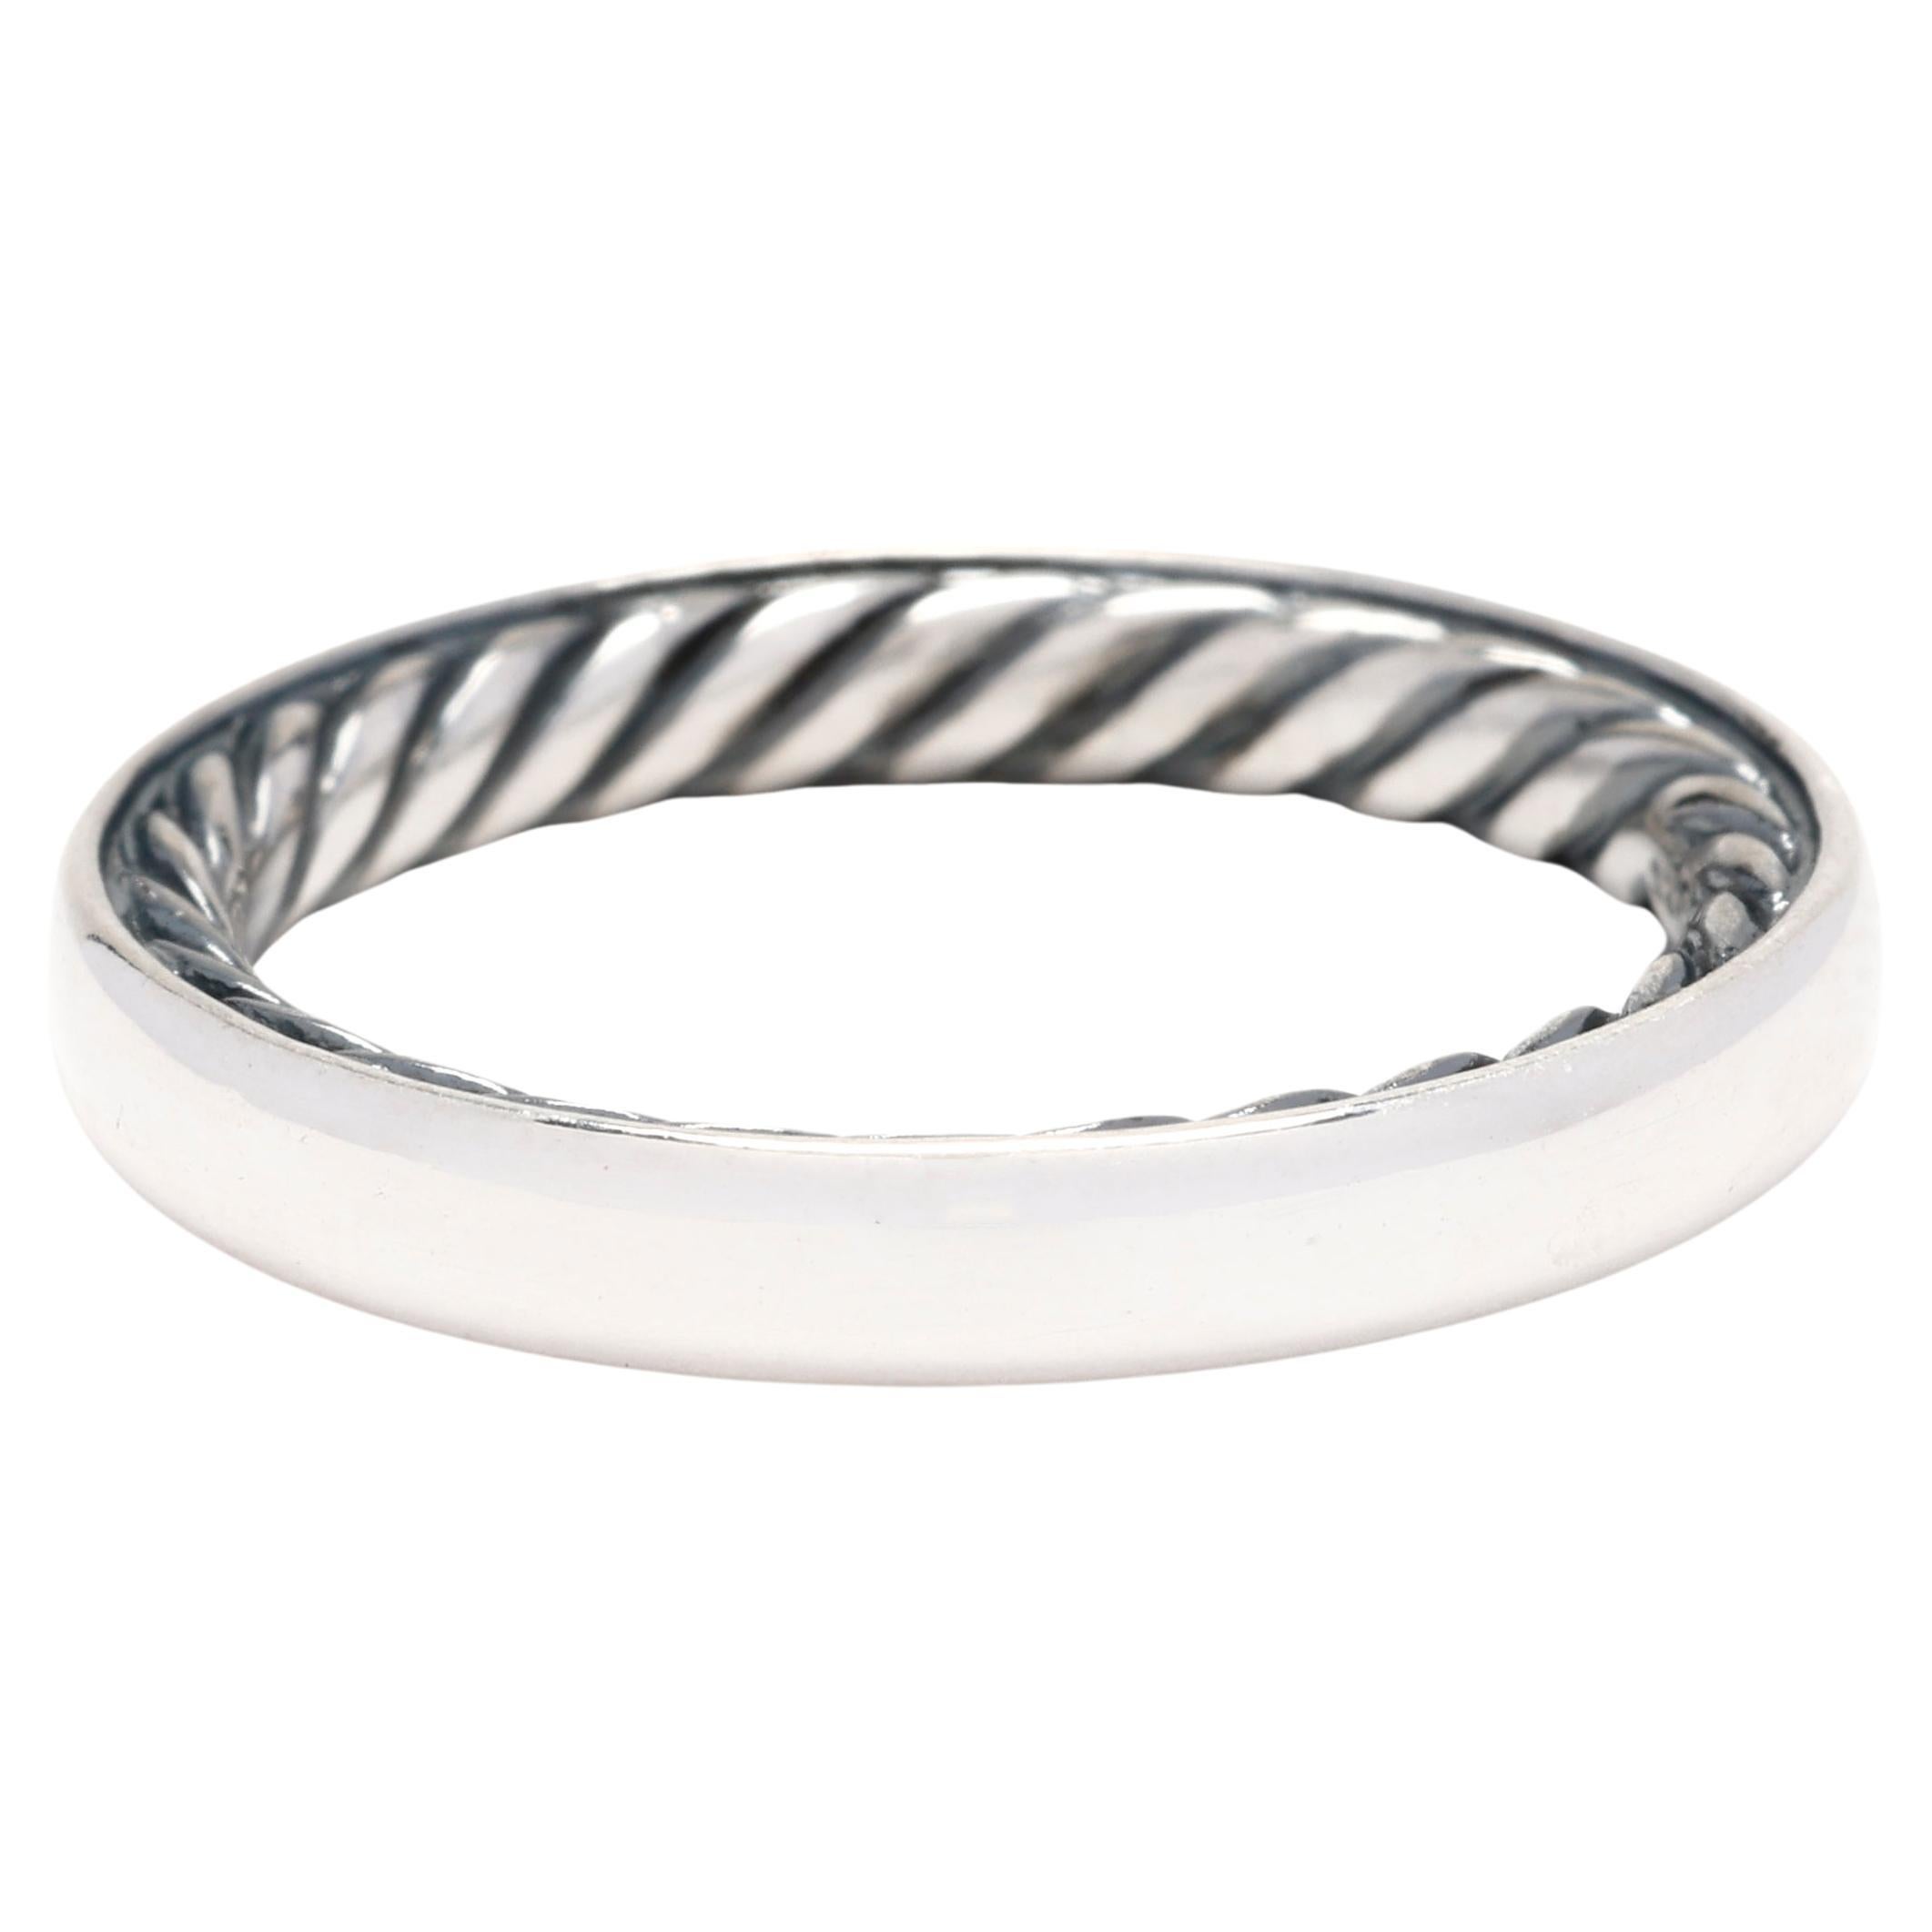 David Yurman Sterlingsilber-Ring, Ring Größe 5,75, inneres gedrehtes Design